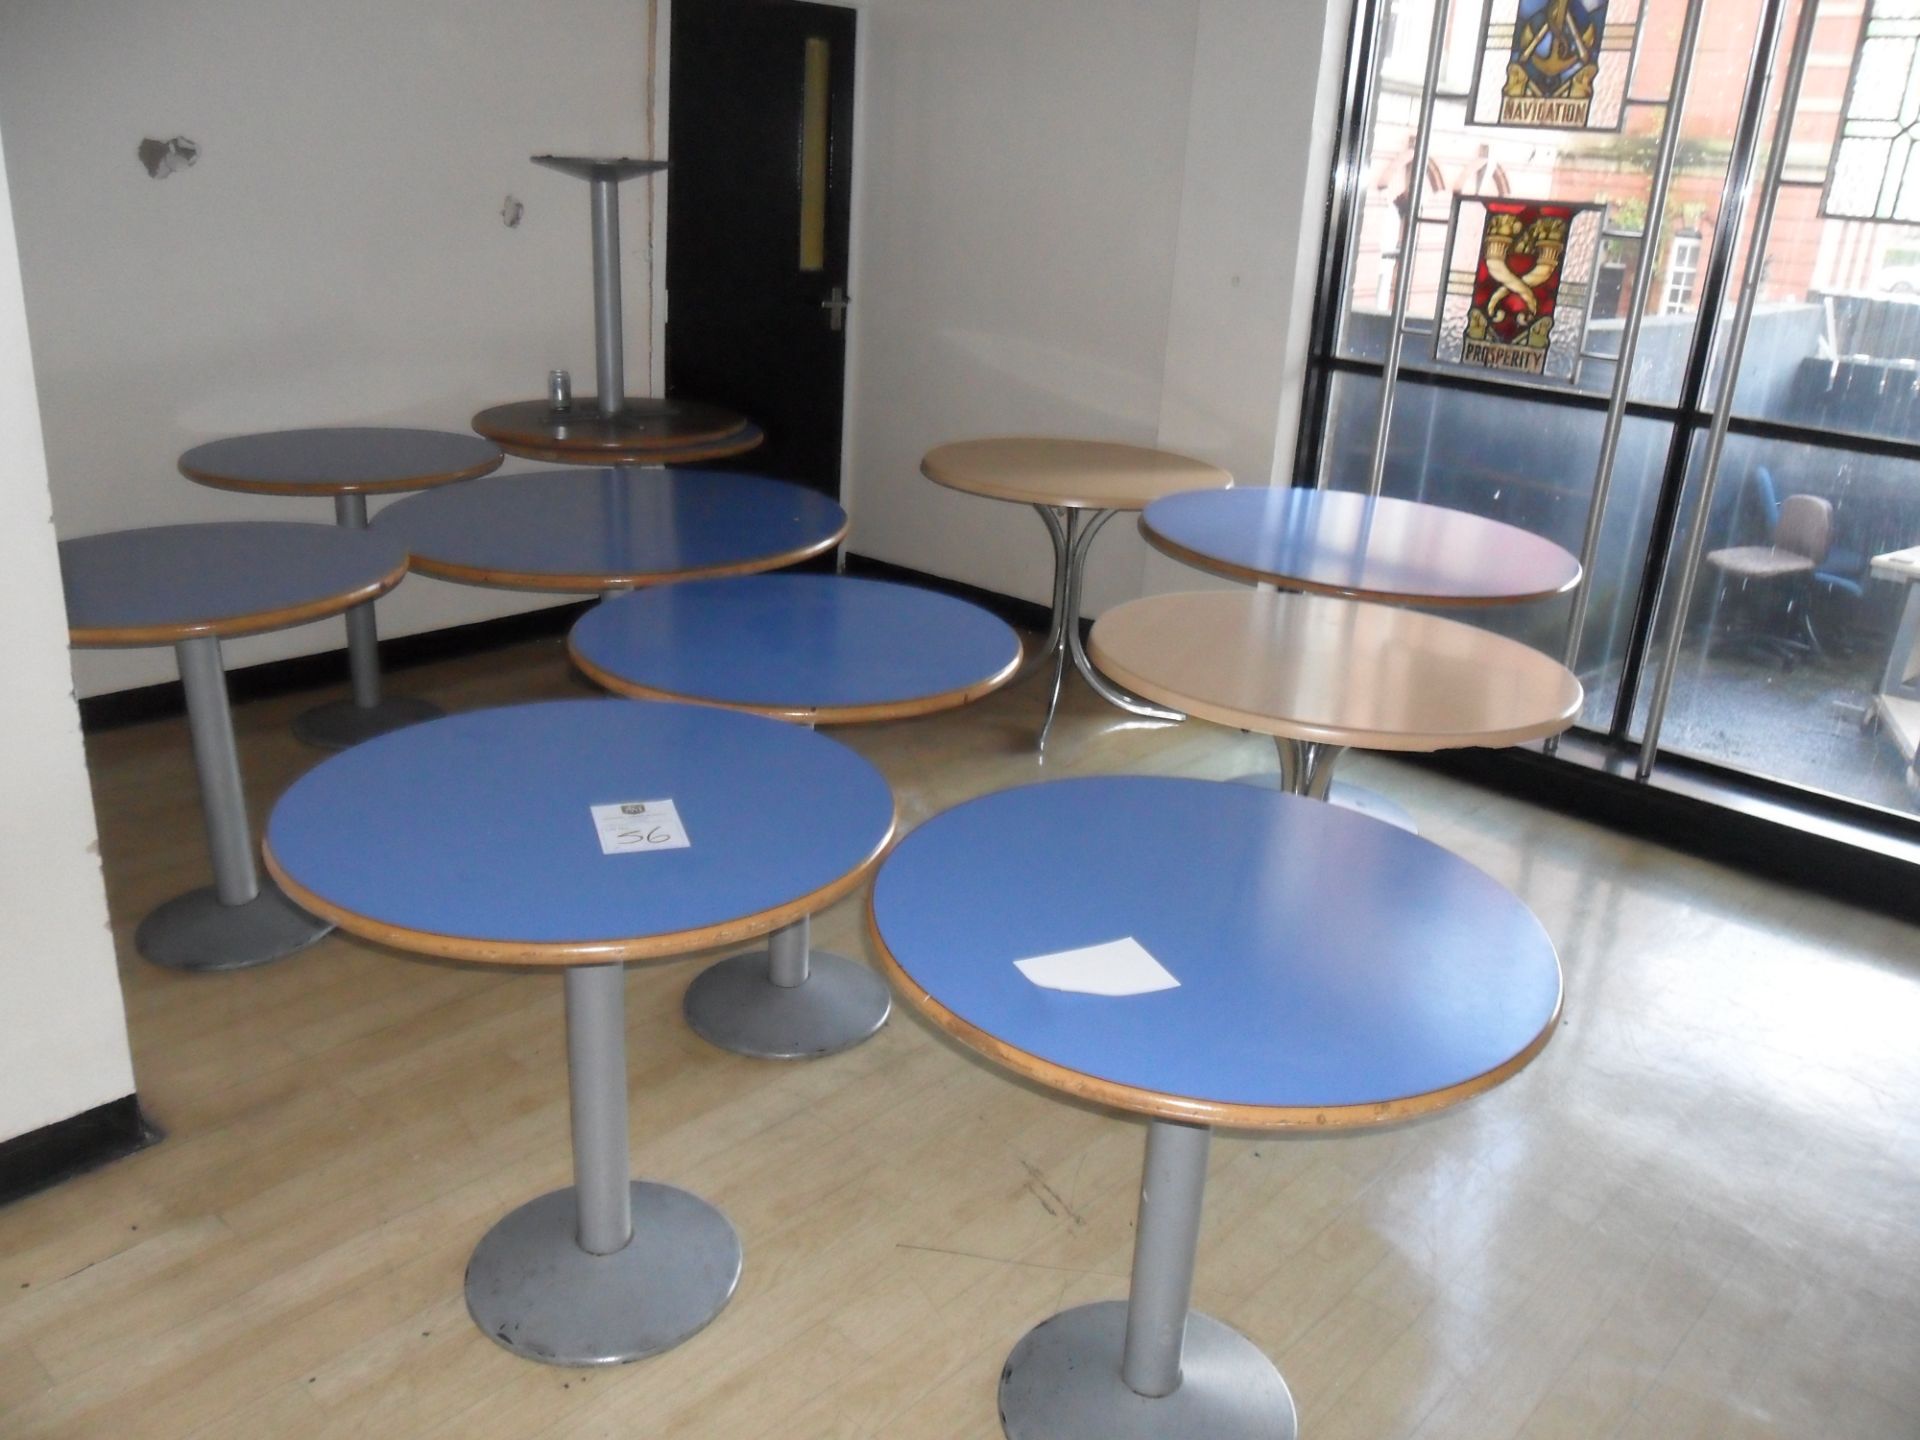 2 x cafe retaurant tables